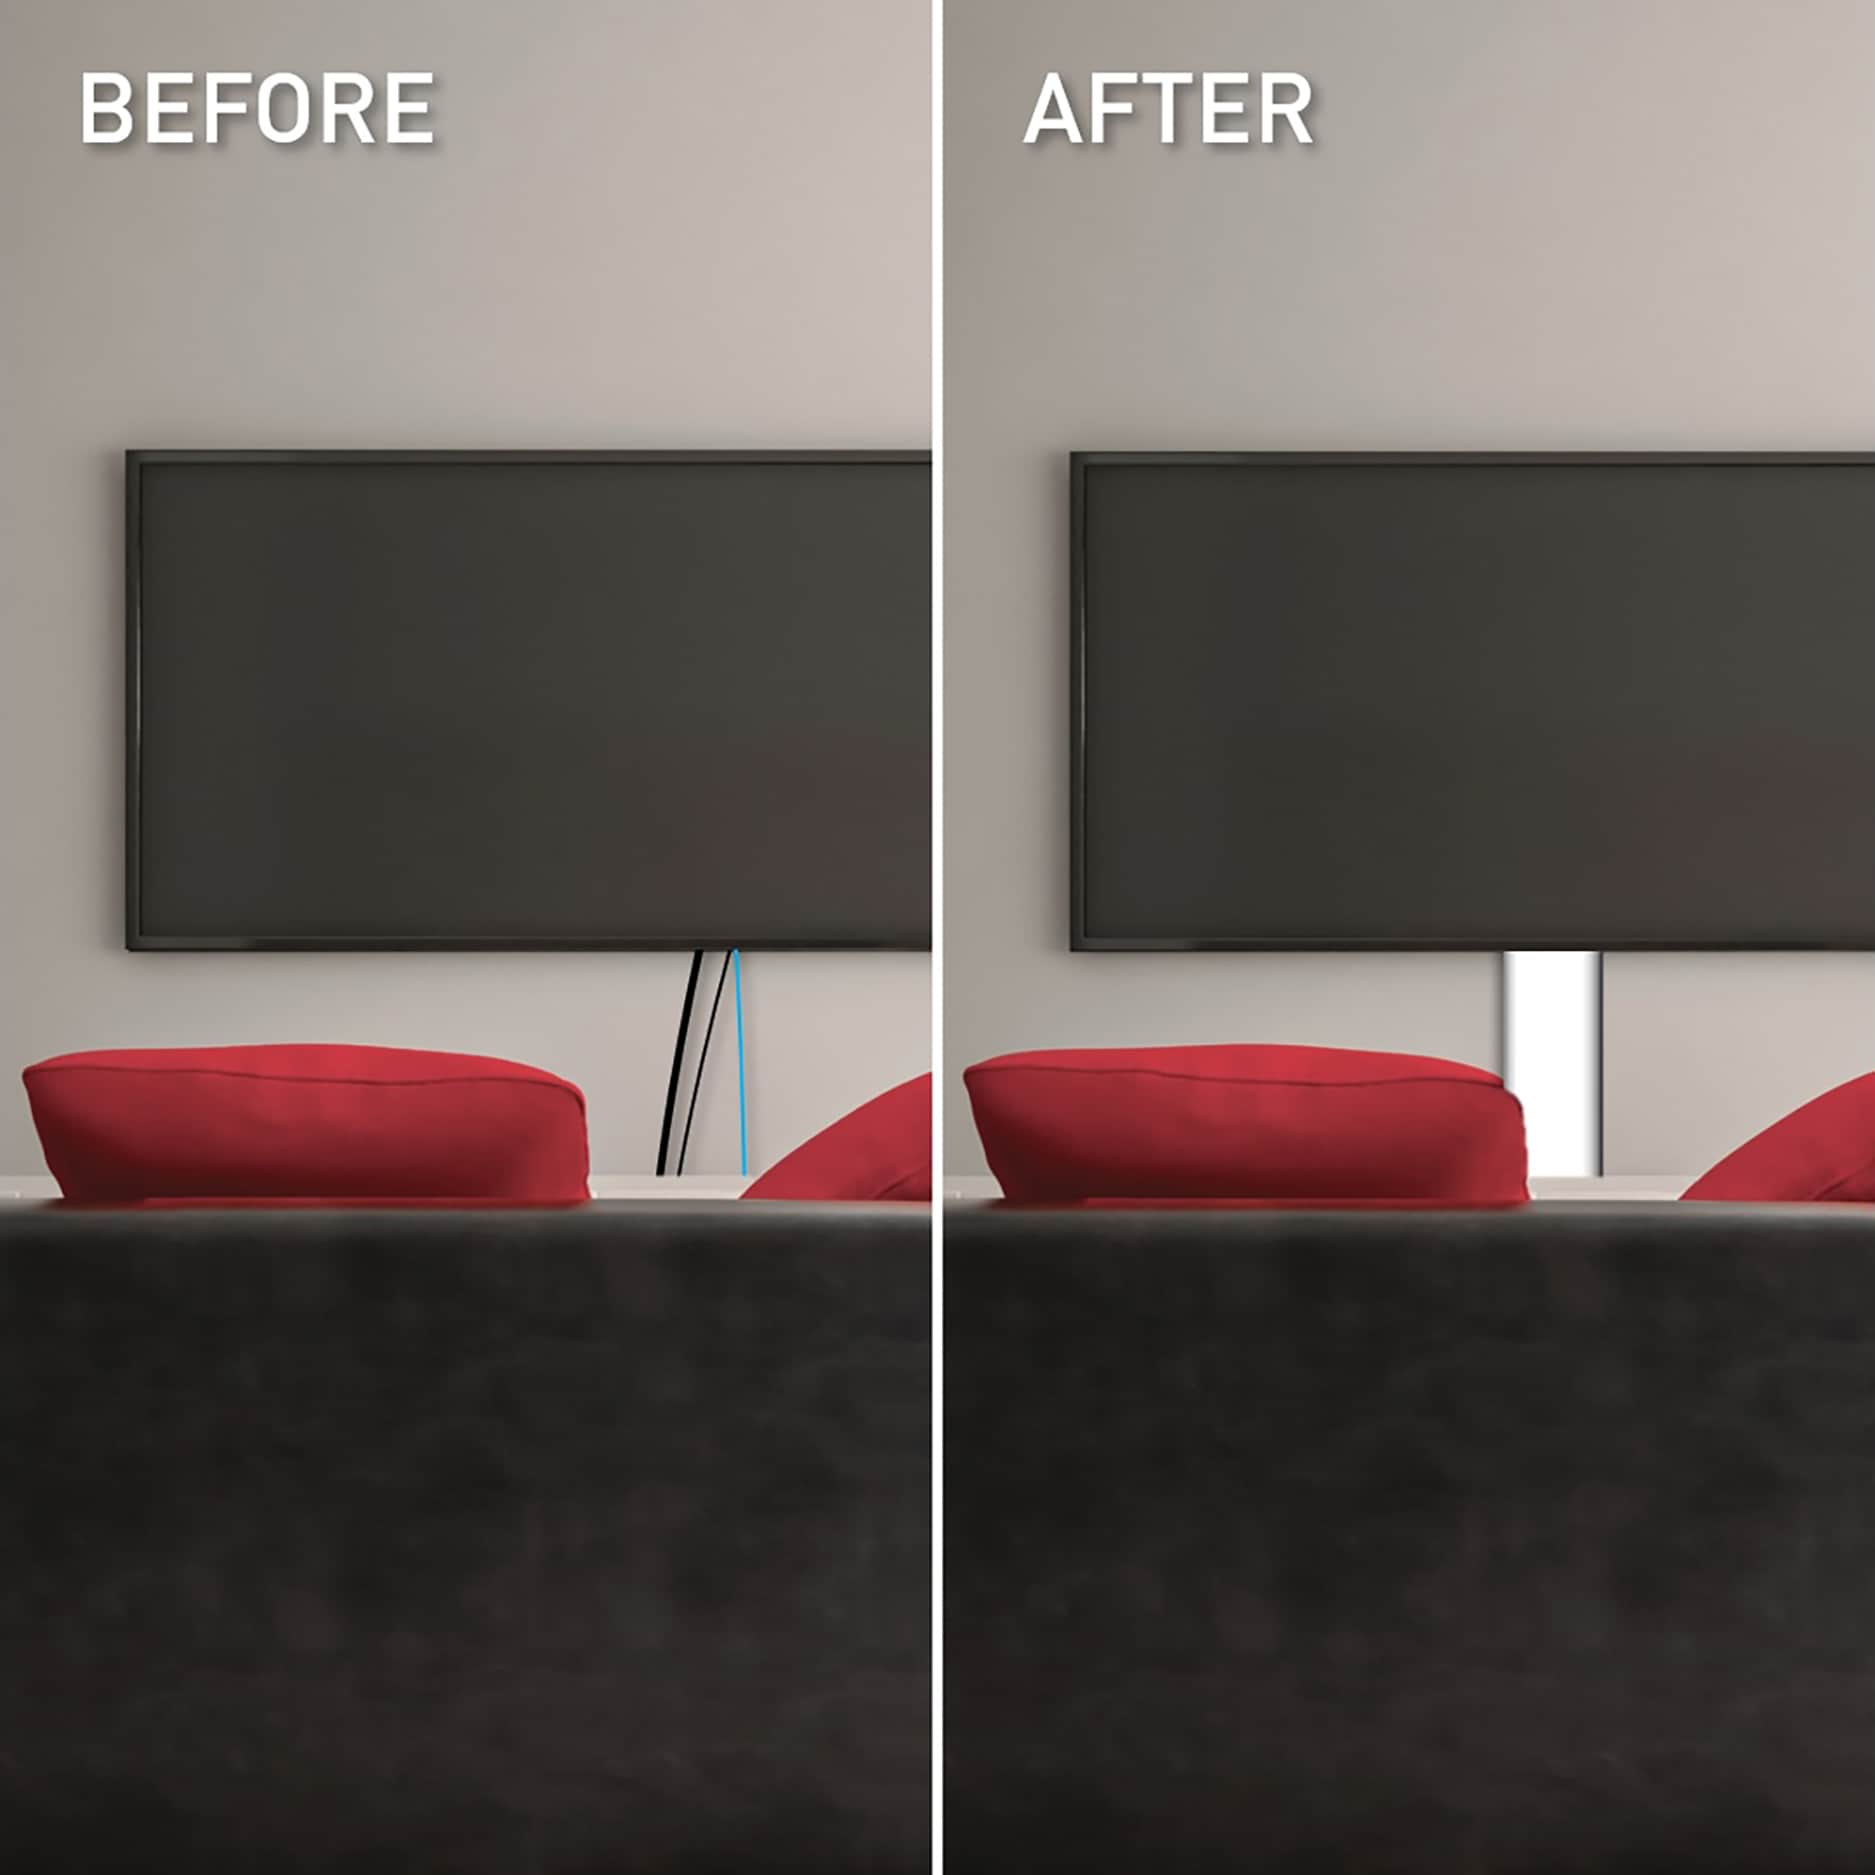 Legrand 48-in x 3.5-in PVC White Flat Screen Tv Kit in the Cord